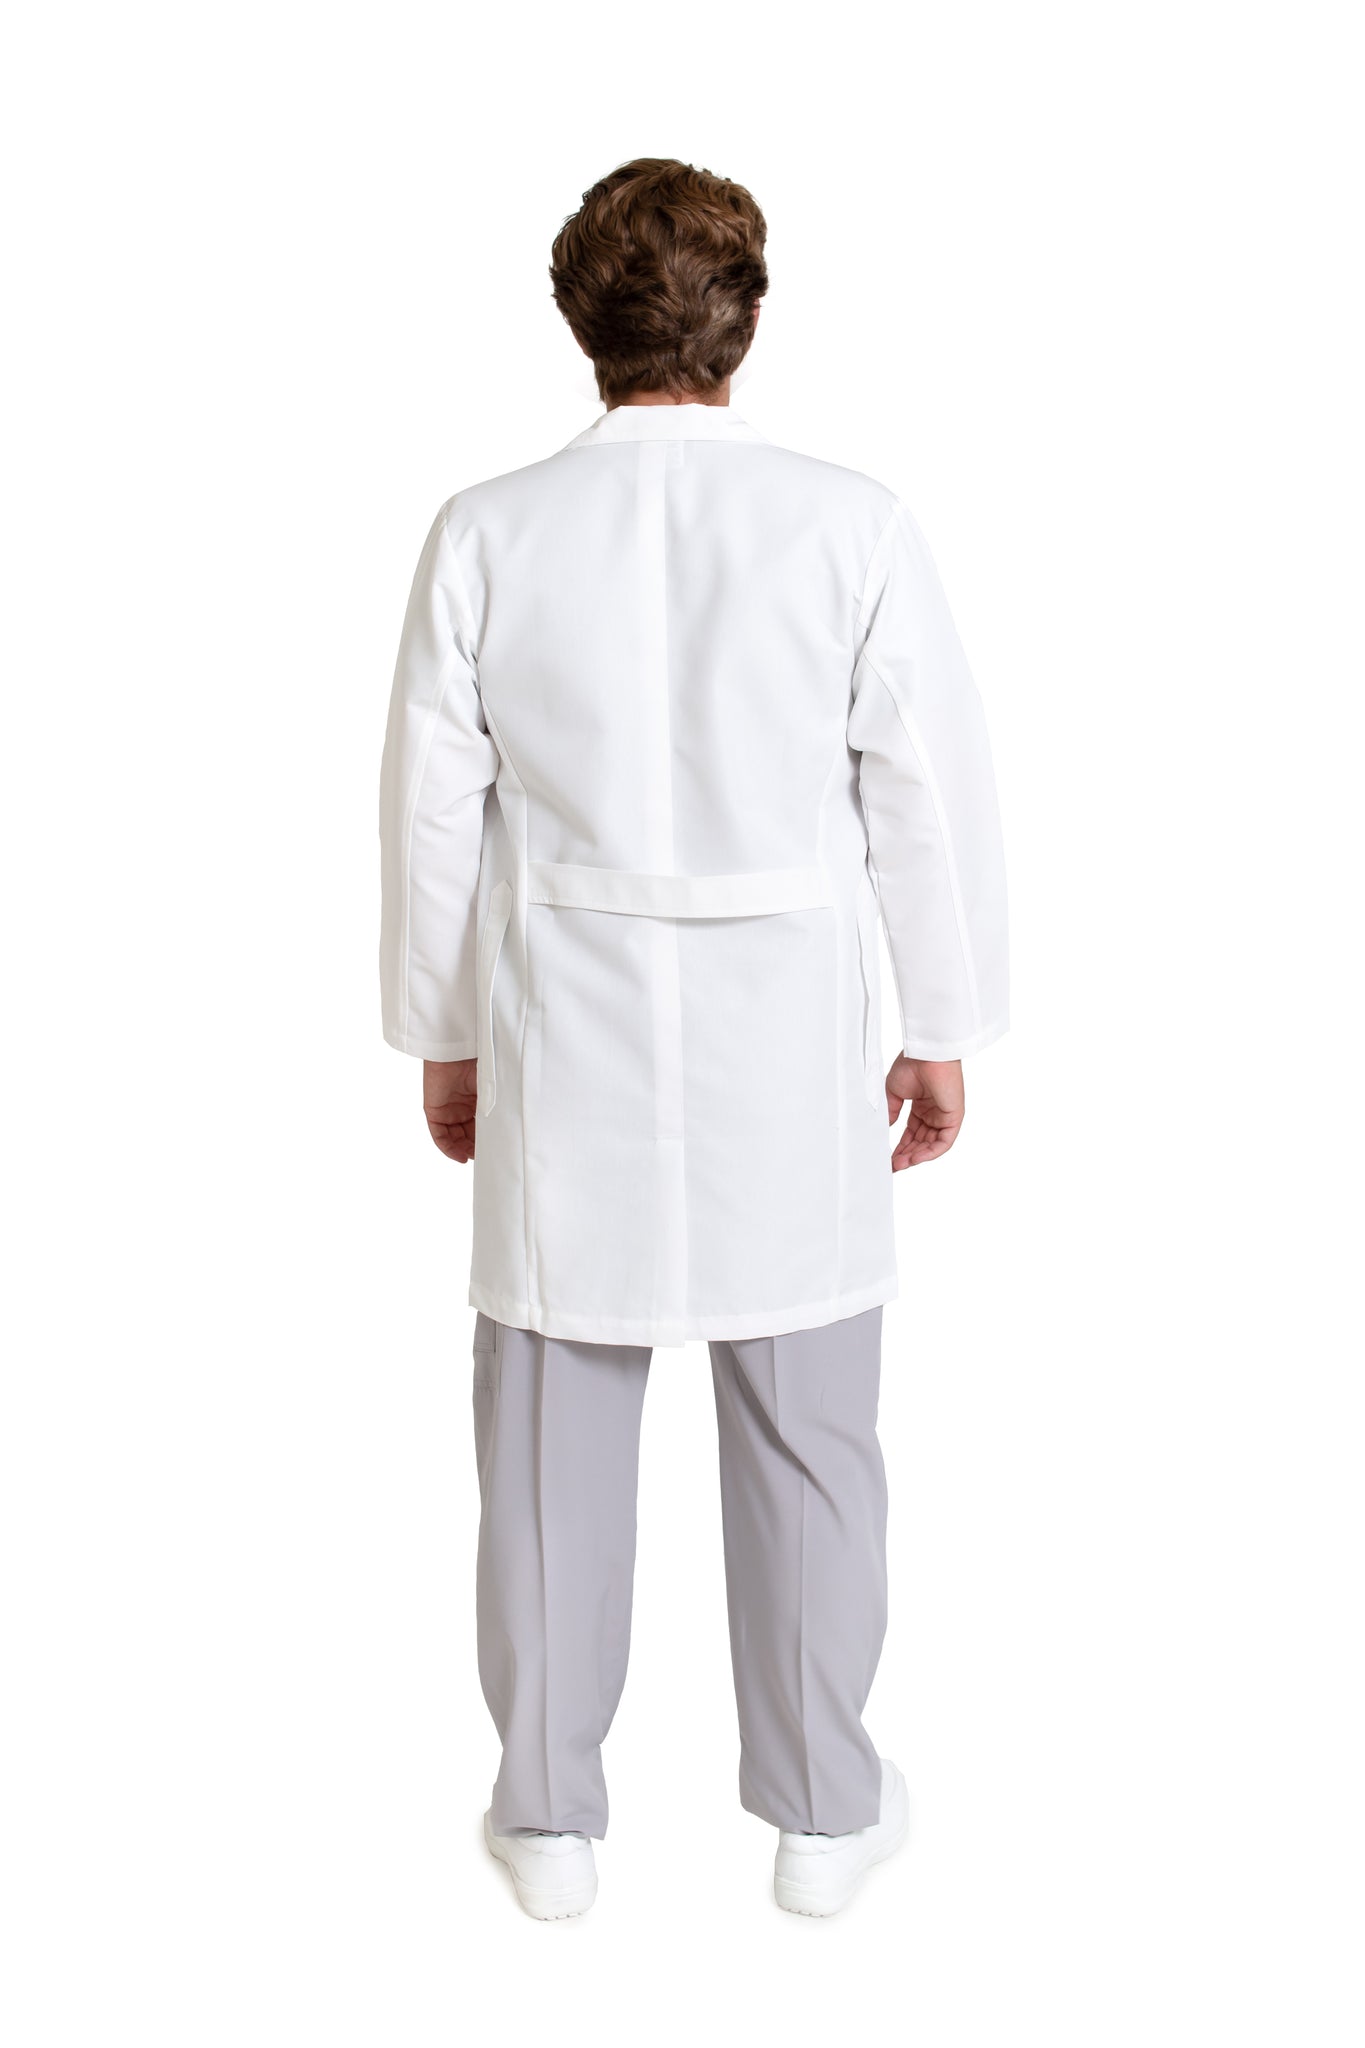 Bata blanca personalizable entallada Velilla - Uniformes laboratorio - Bata  médicas hospital